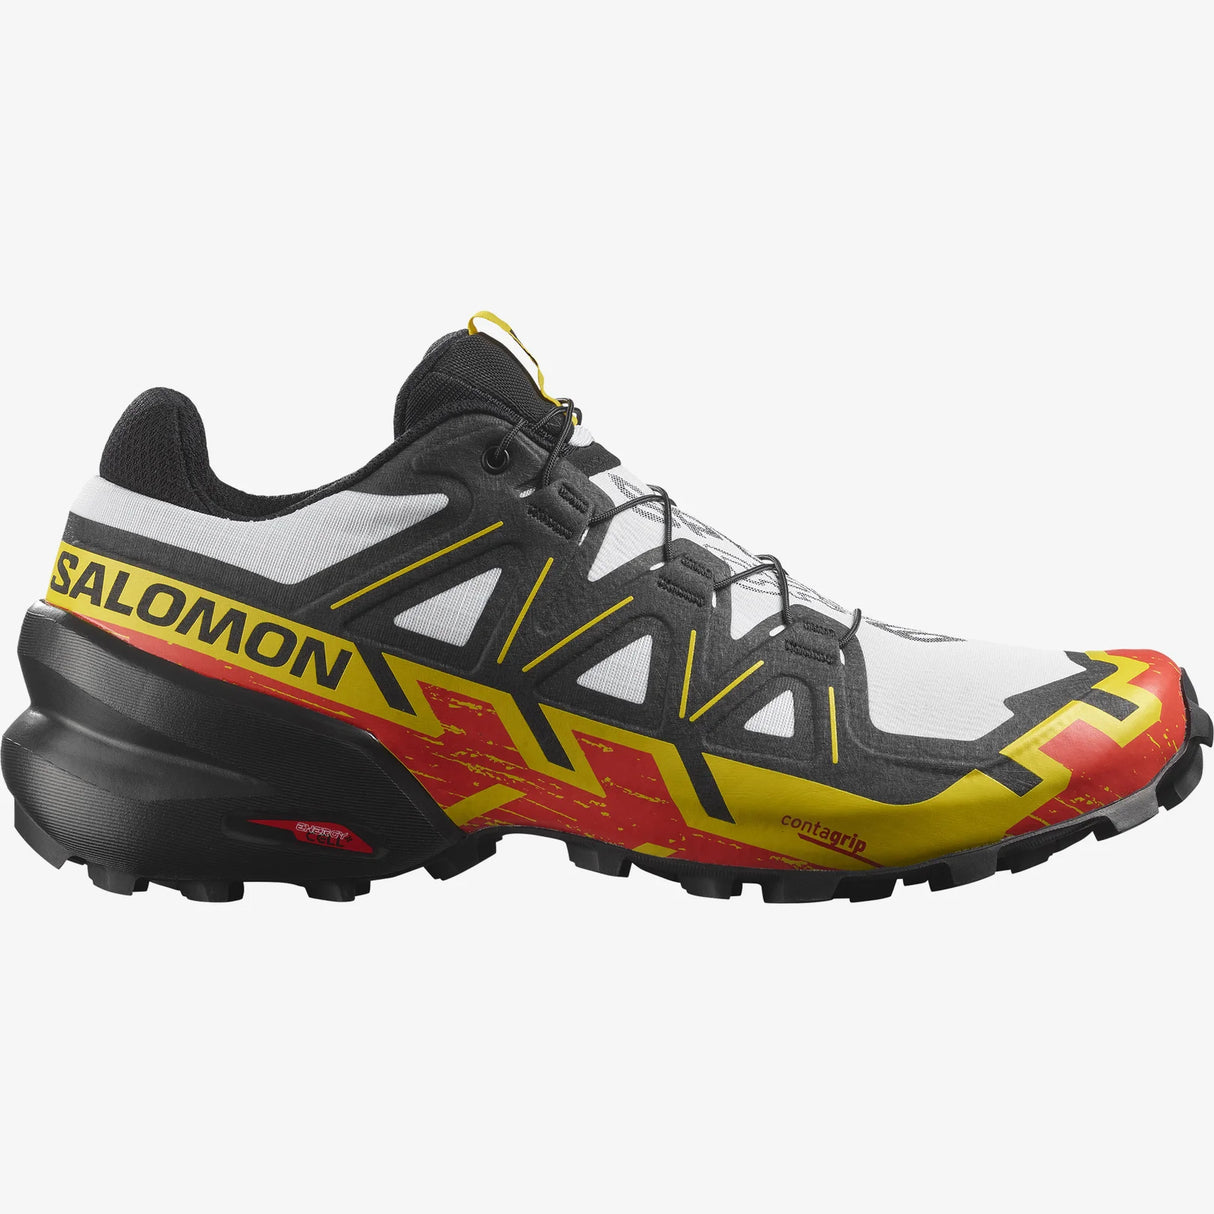 Speedcross 4 Trail-Running Shoes - Men's